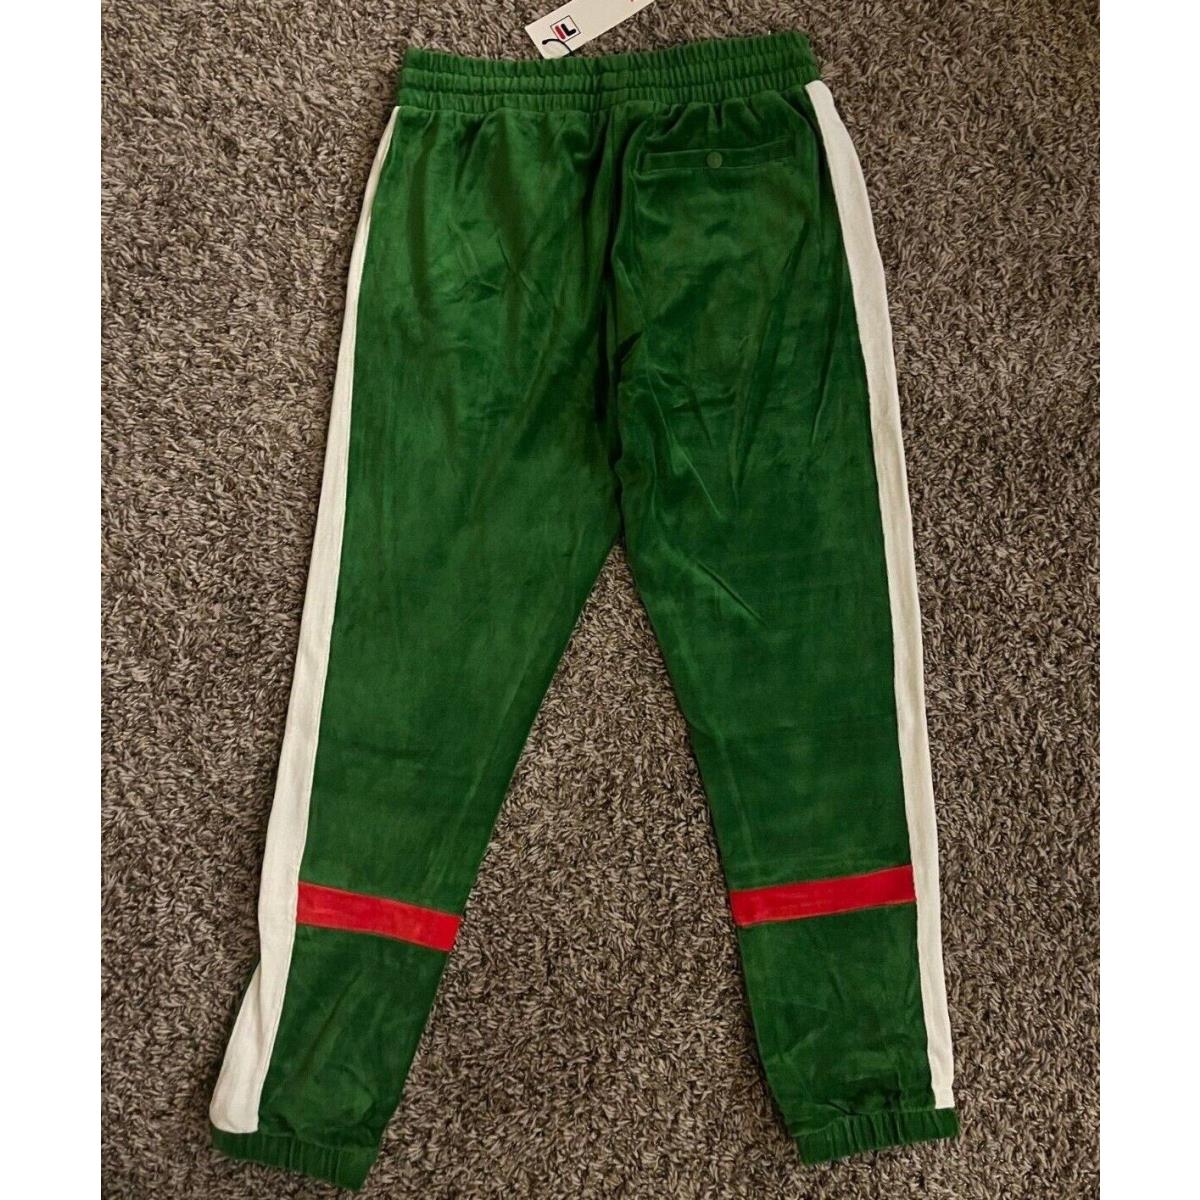 Fila clothing  - Green 8